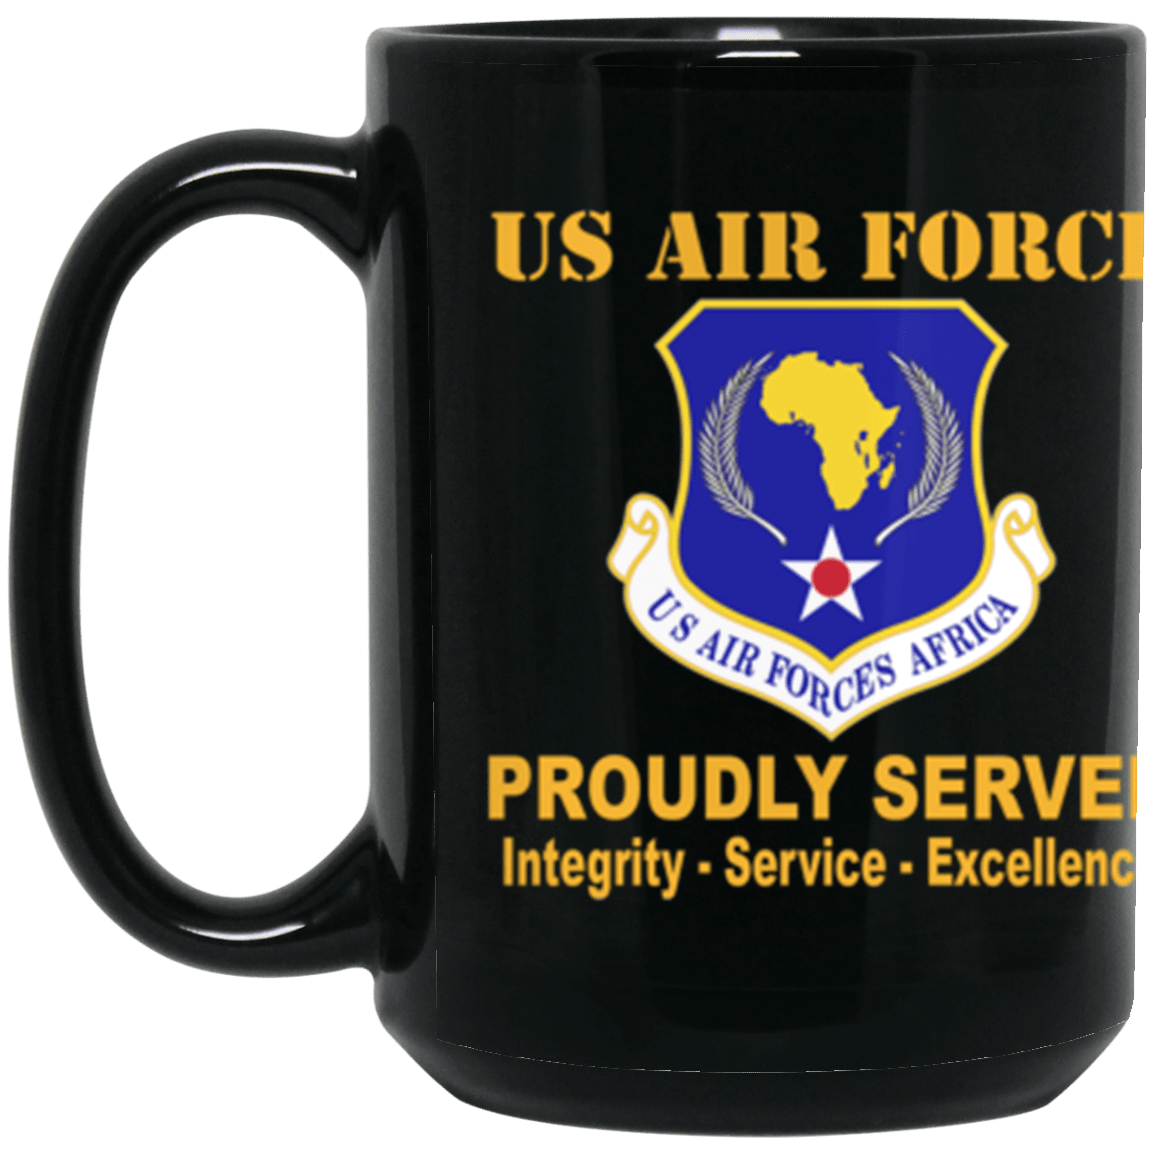 US Air Force Military Airlift Command Proudly Served Core Values 15 oz. Black Mug-Mug-USAF-Veterans Nation